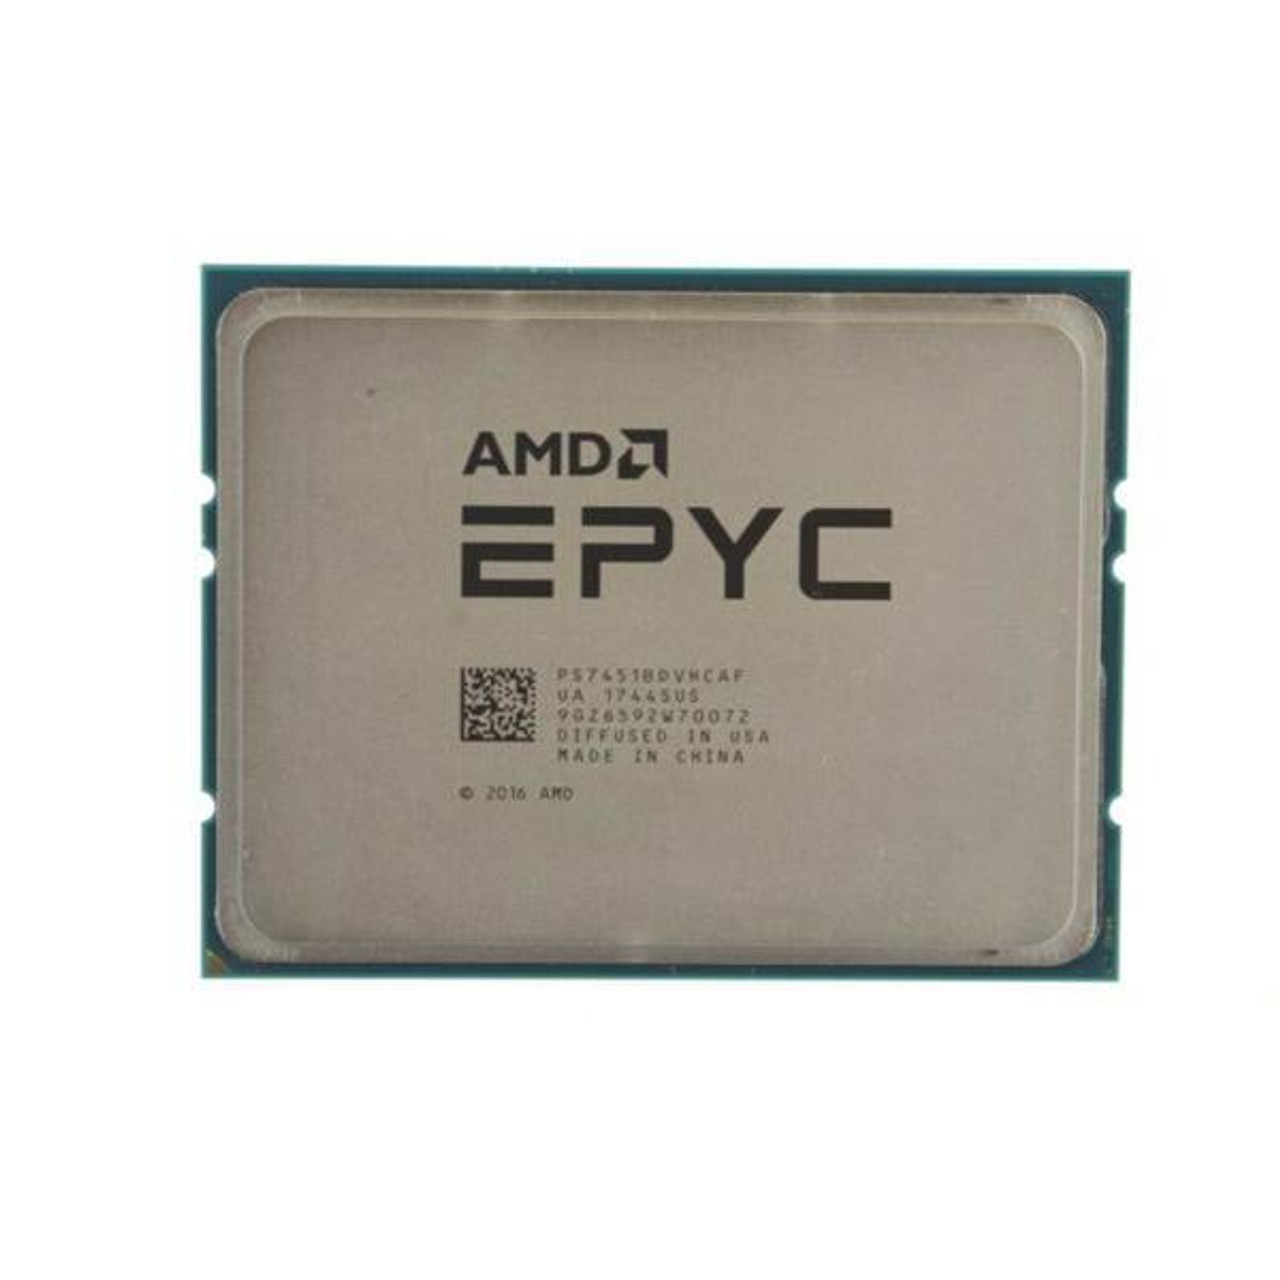 HPE DL385 Gen10 7451 AMD DL385 Gen10 7451 AMD Processor Upgrade